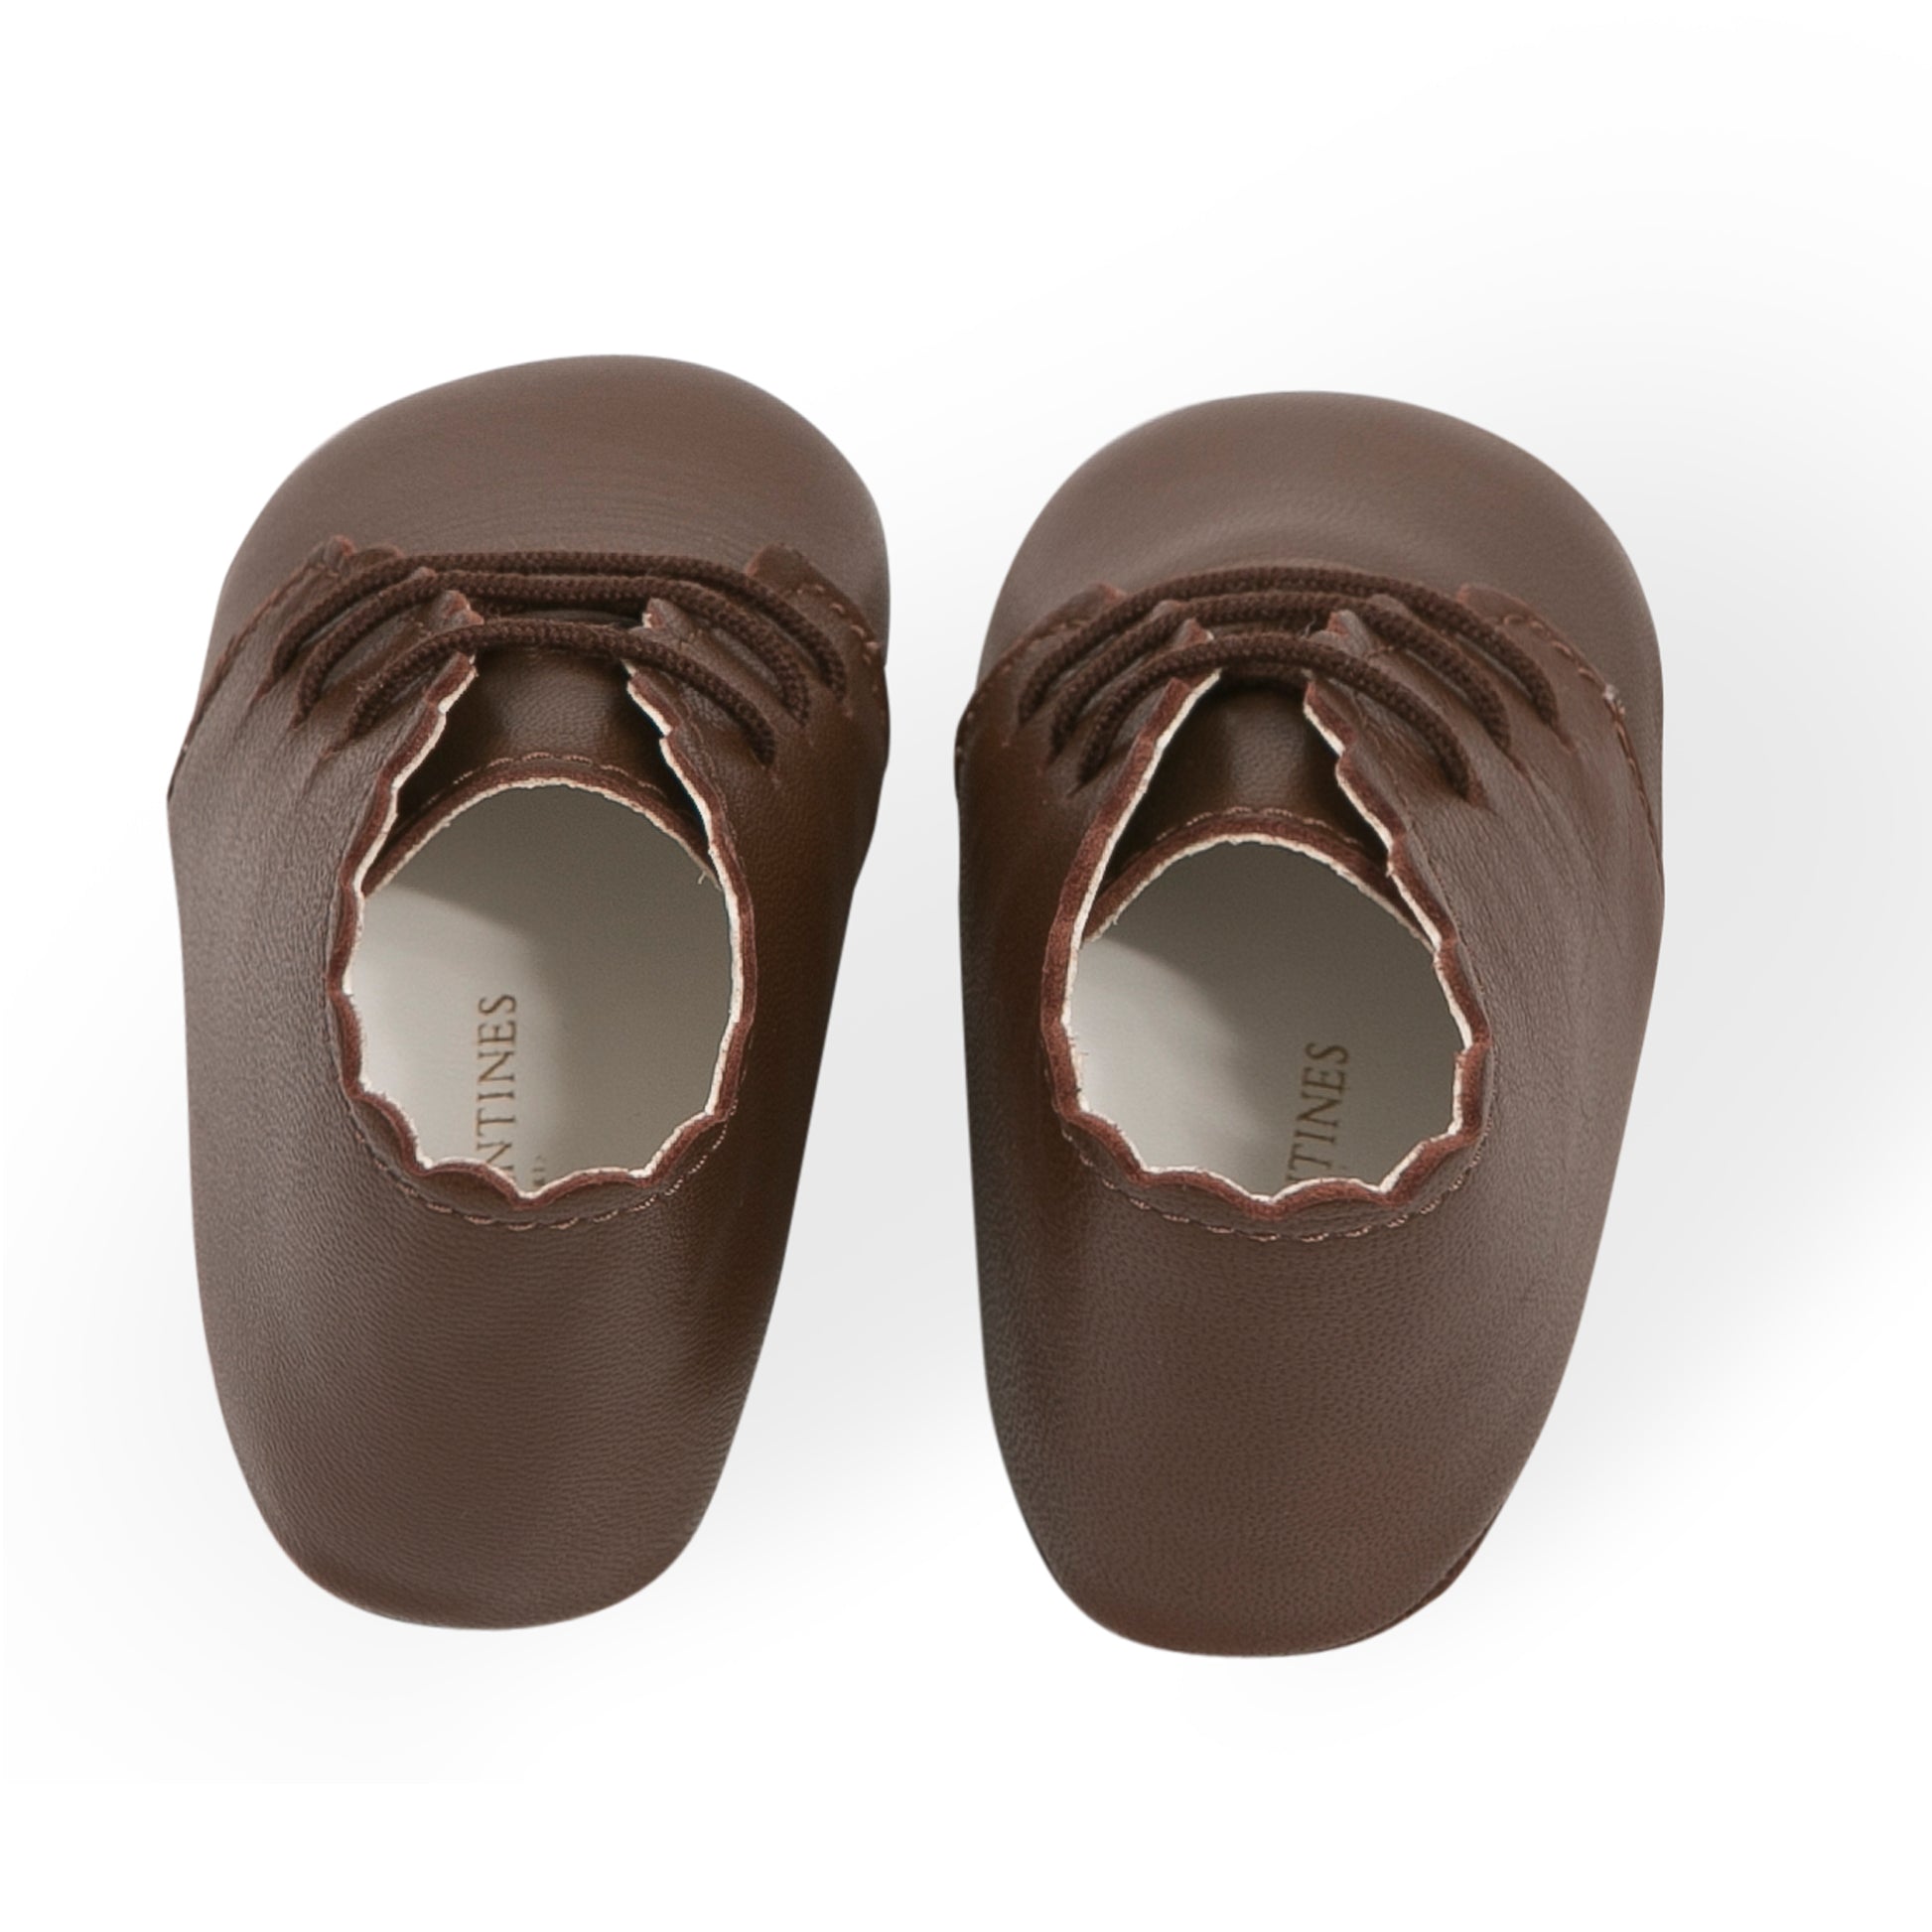 Chaussures bottines cuir chocolat les enfantines